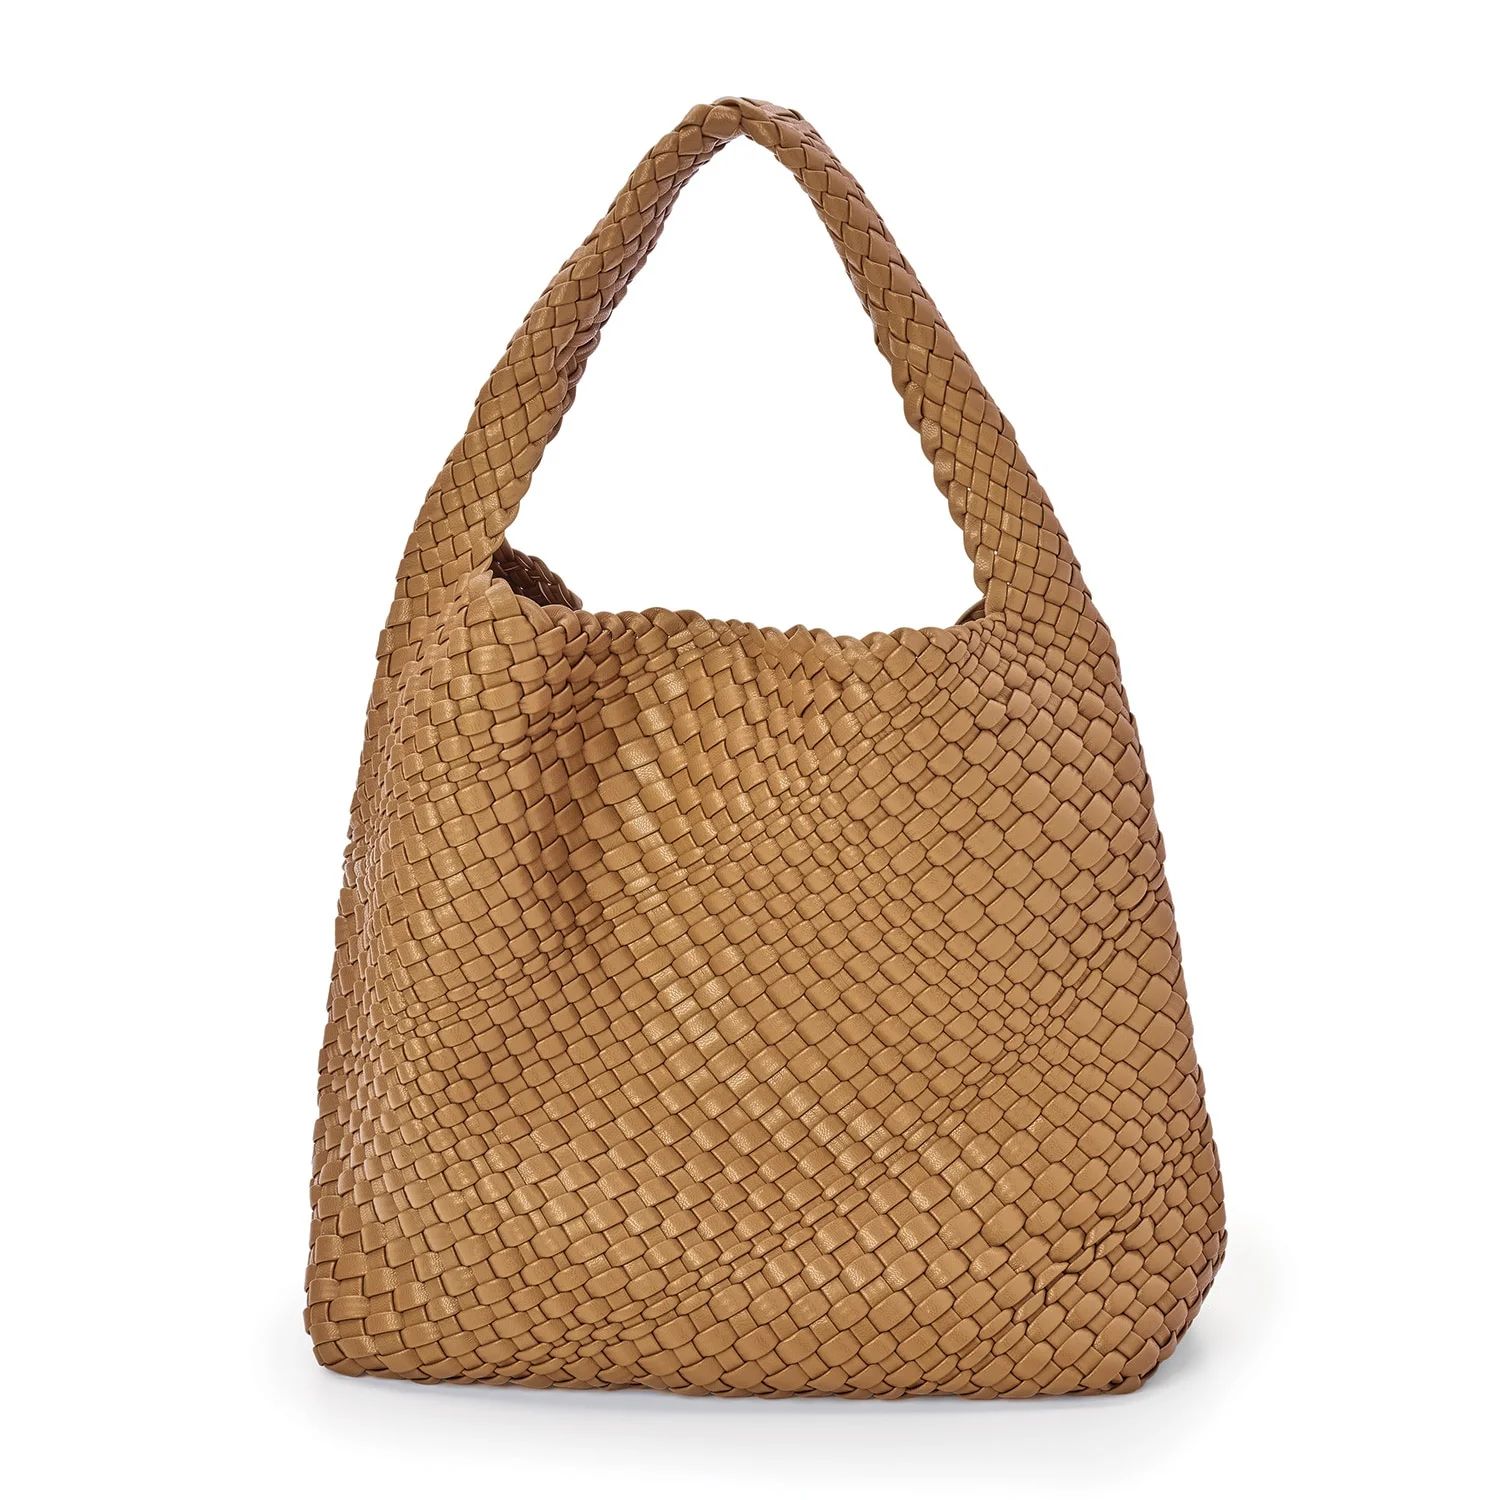 Woven Vegan Leather Handbag - Brown | Walmart (US)